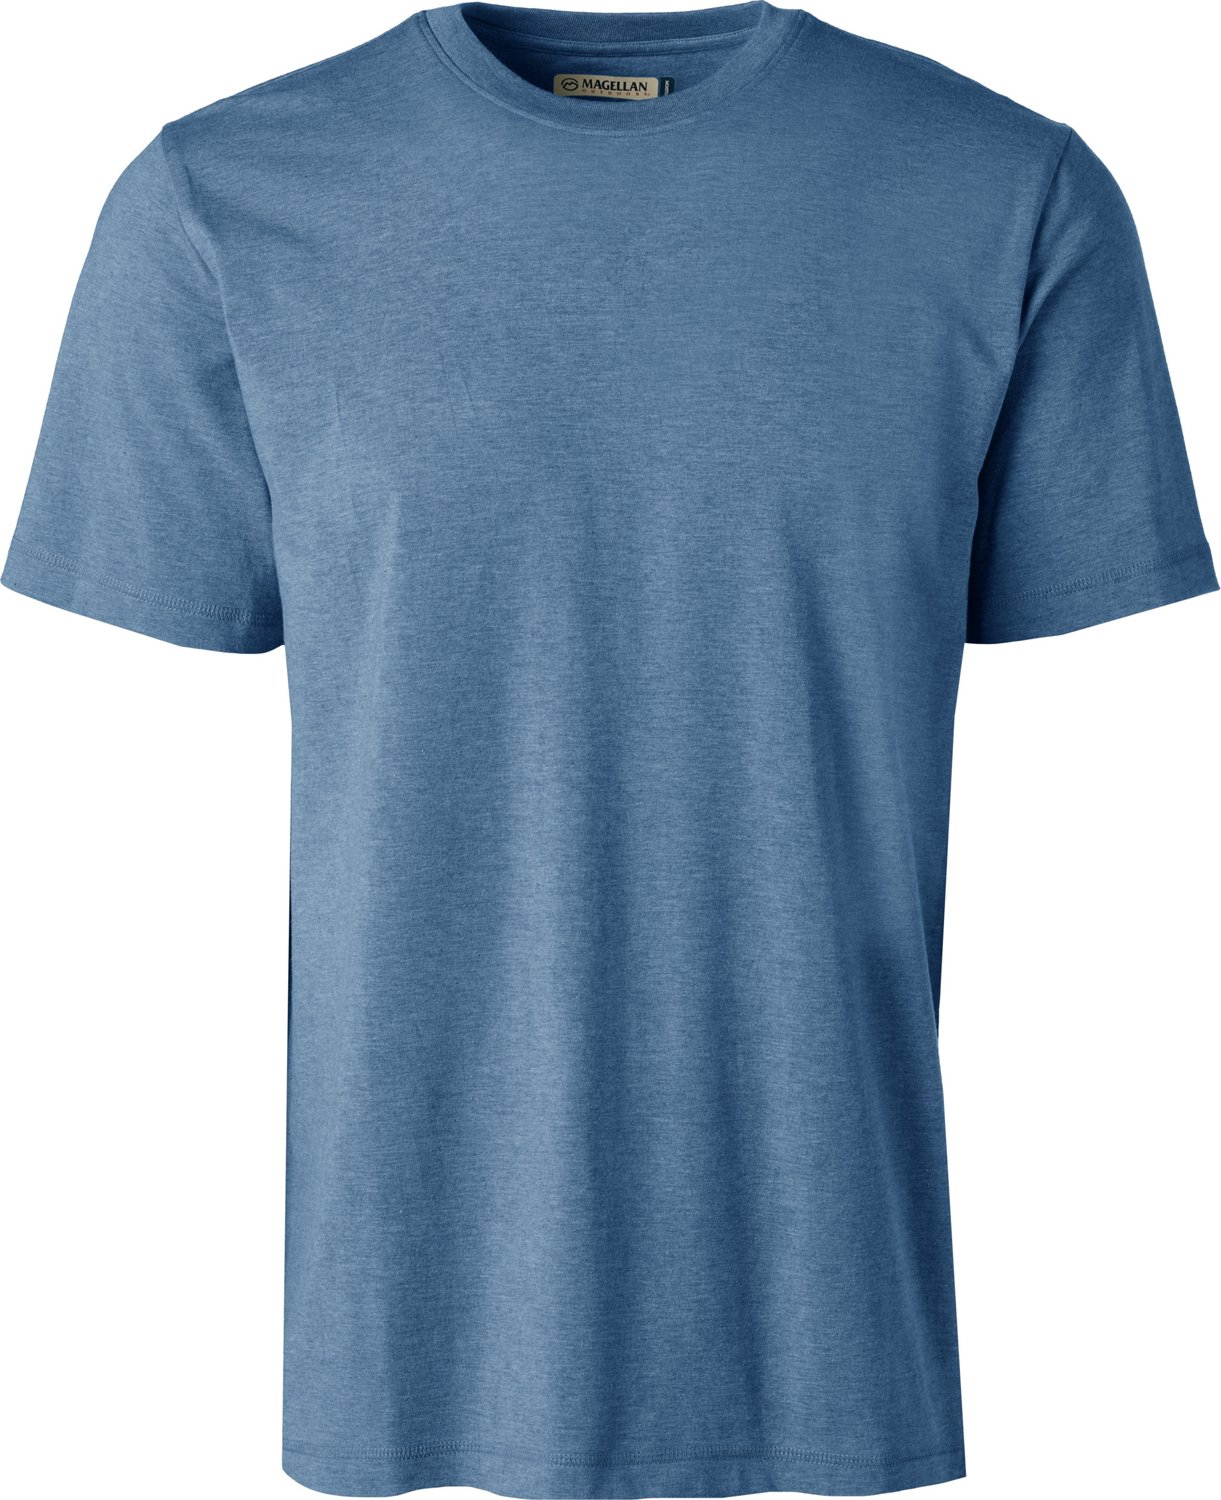 Magellan Men's Shirt - Blue - L